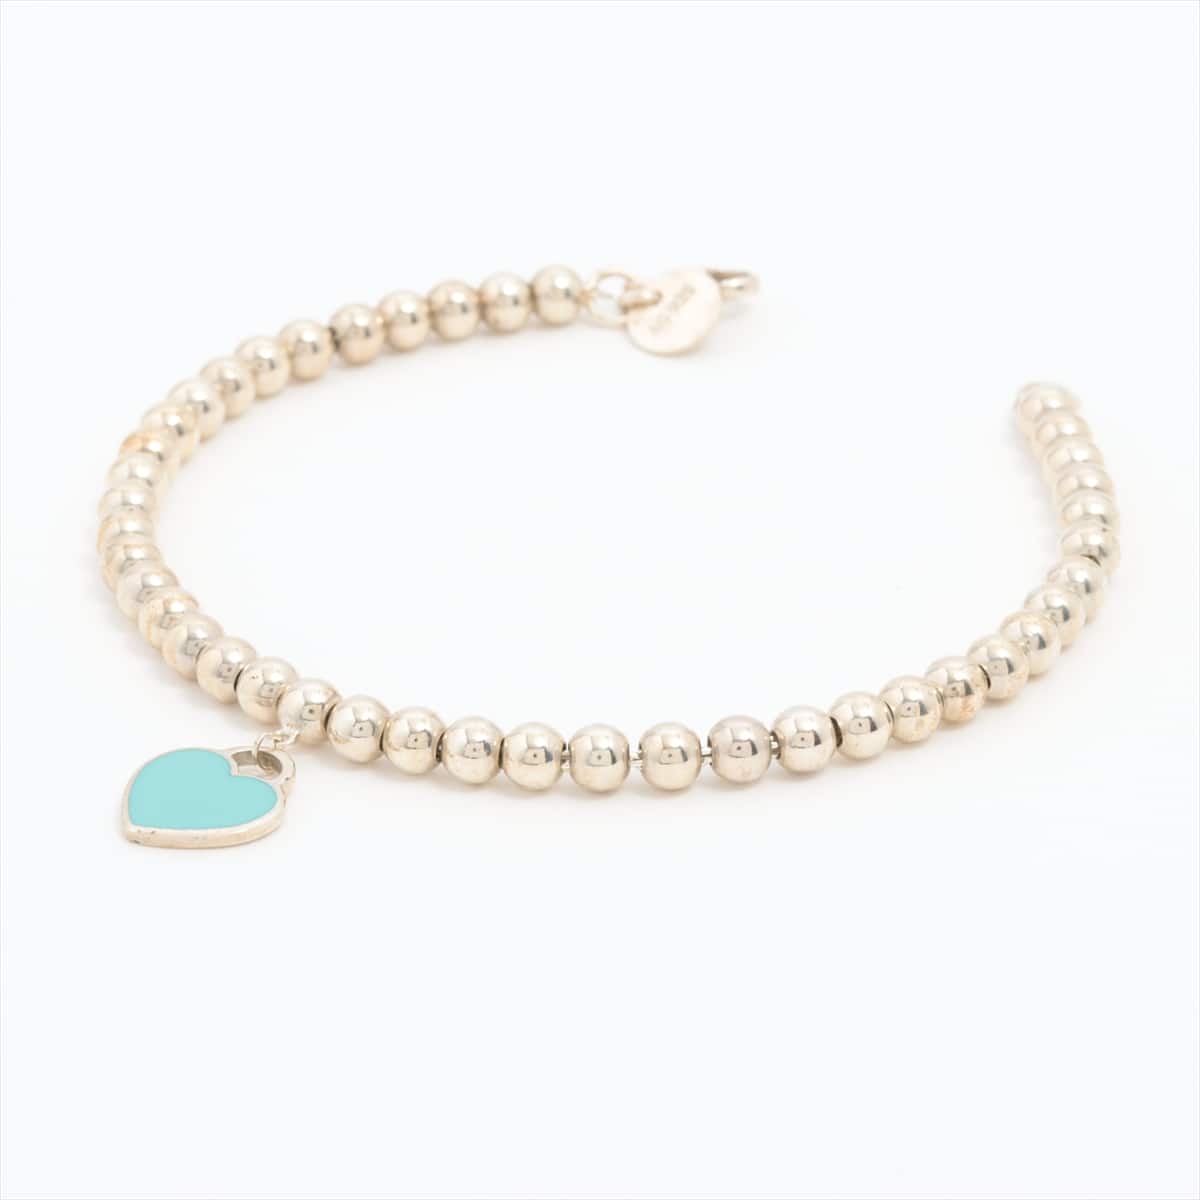 Tiffany return Toe Tiffany Mini heart tag Bracelet 925 5.5g Silver Ball Chain